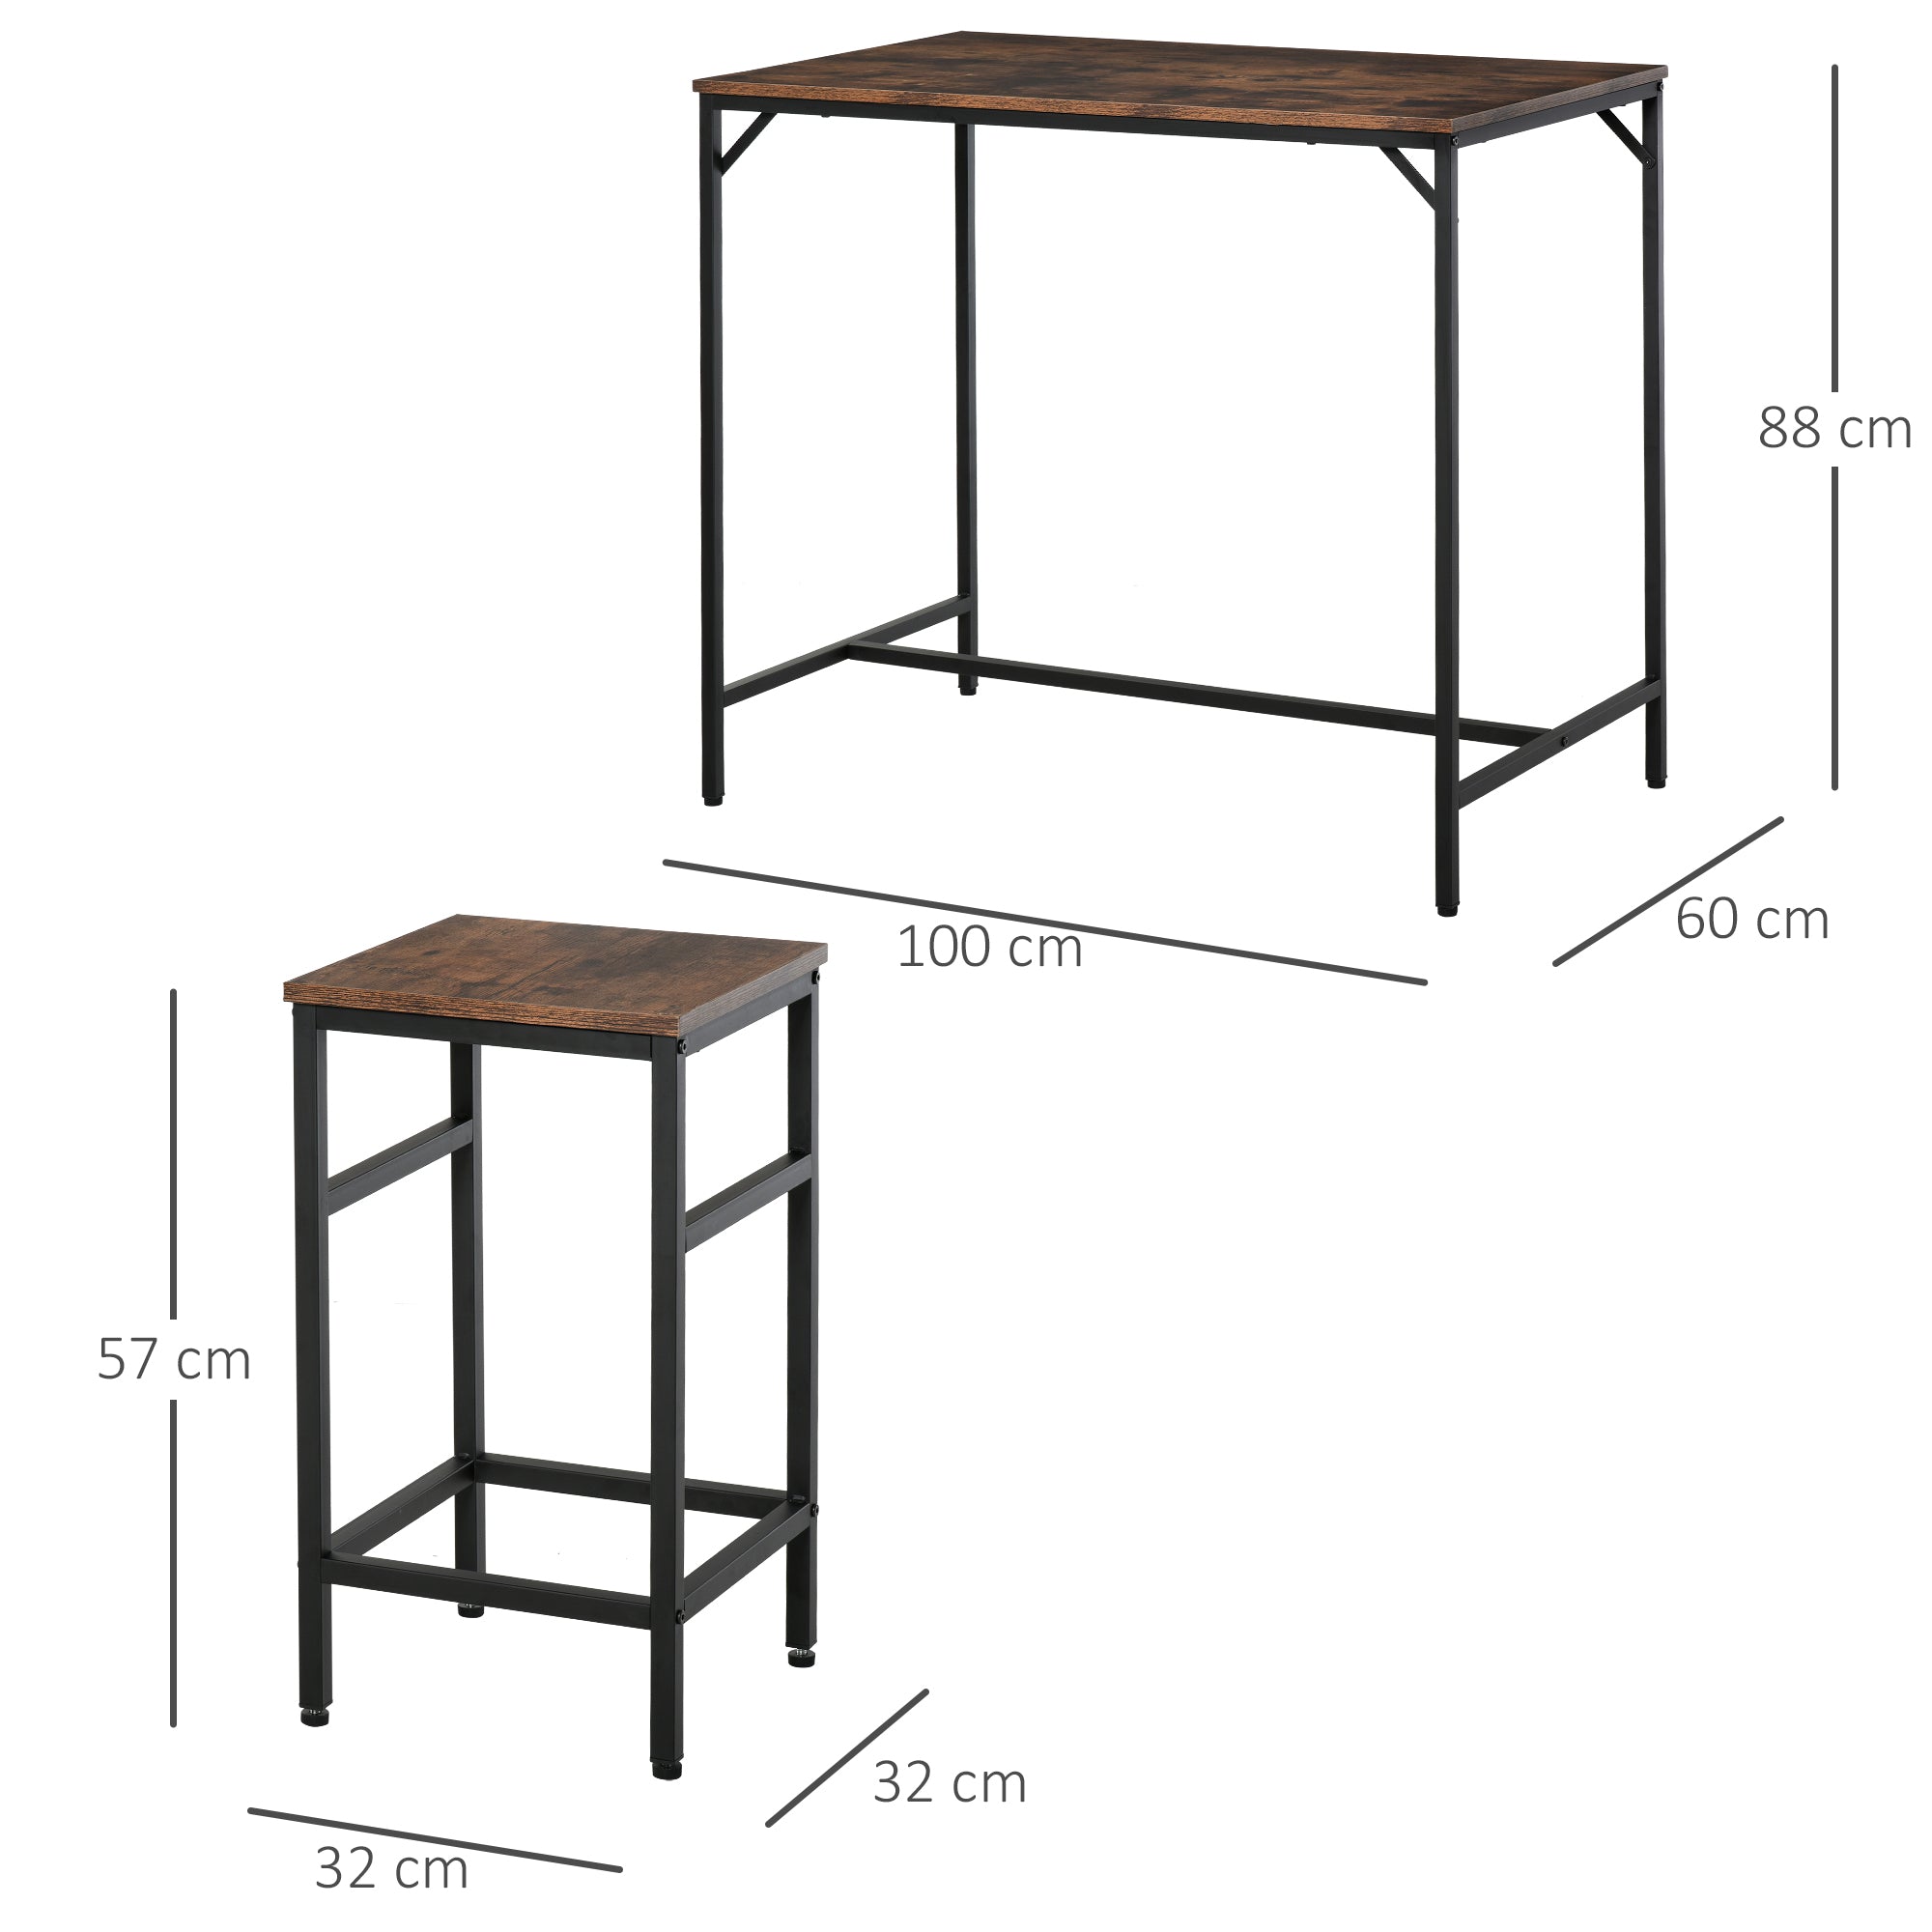 Nancy's Honaunau Bar Table Set - 4 Bar Stools - High Table - Steel - Brown - 100 x 60 x 88 cm